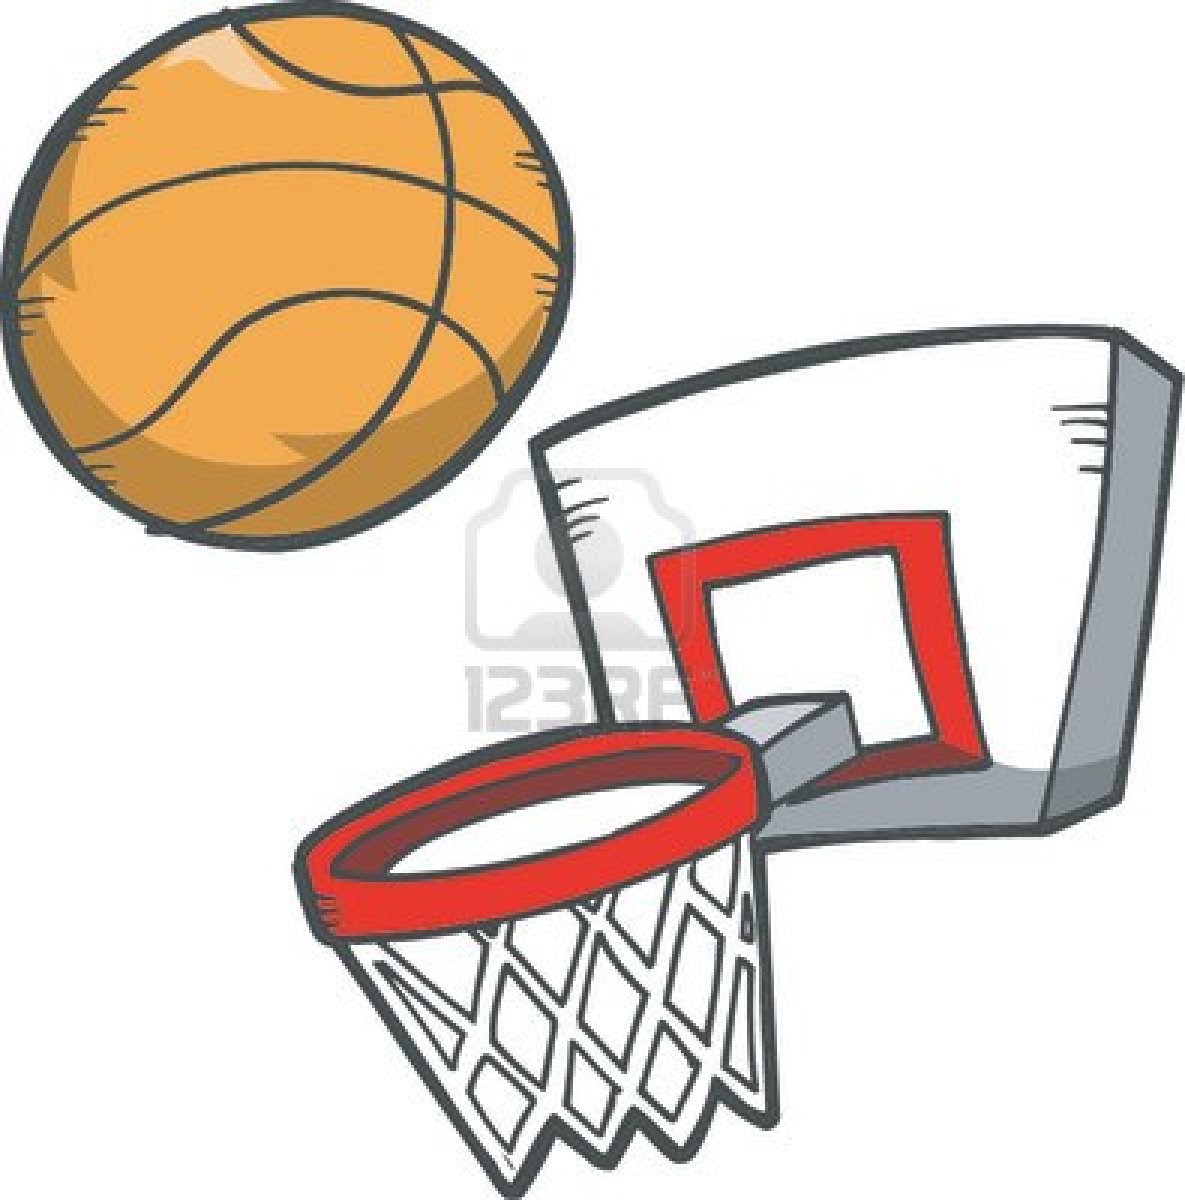 Basketball Rim Clip Art - Basketball Goal Clipart